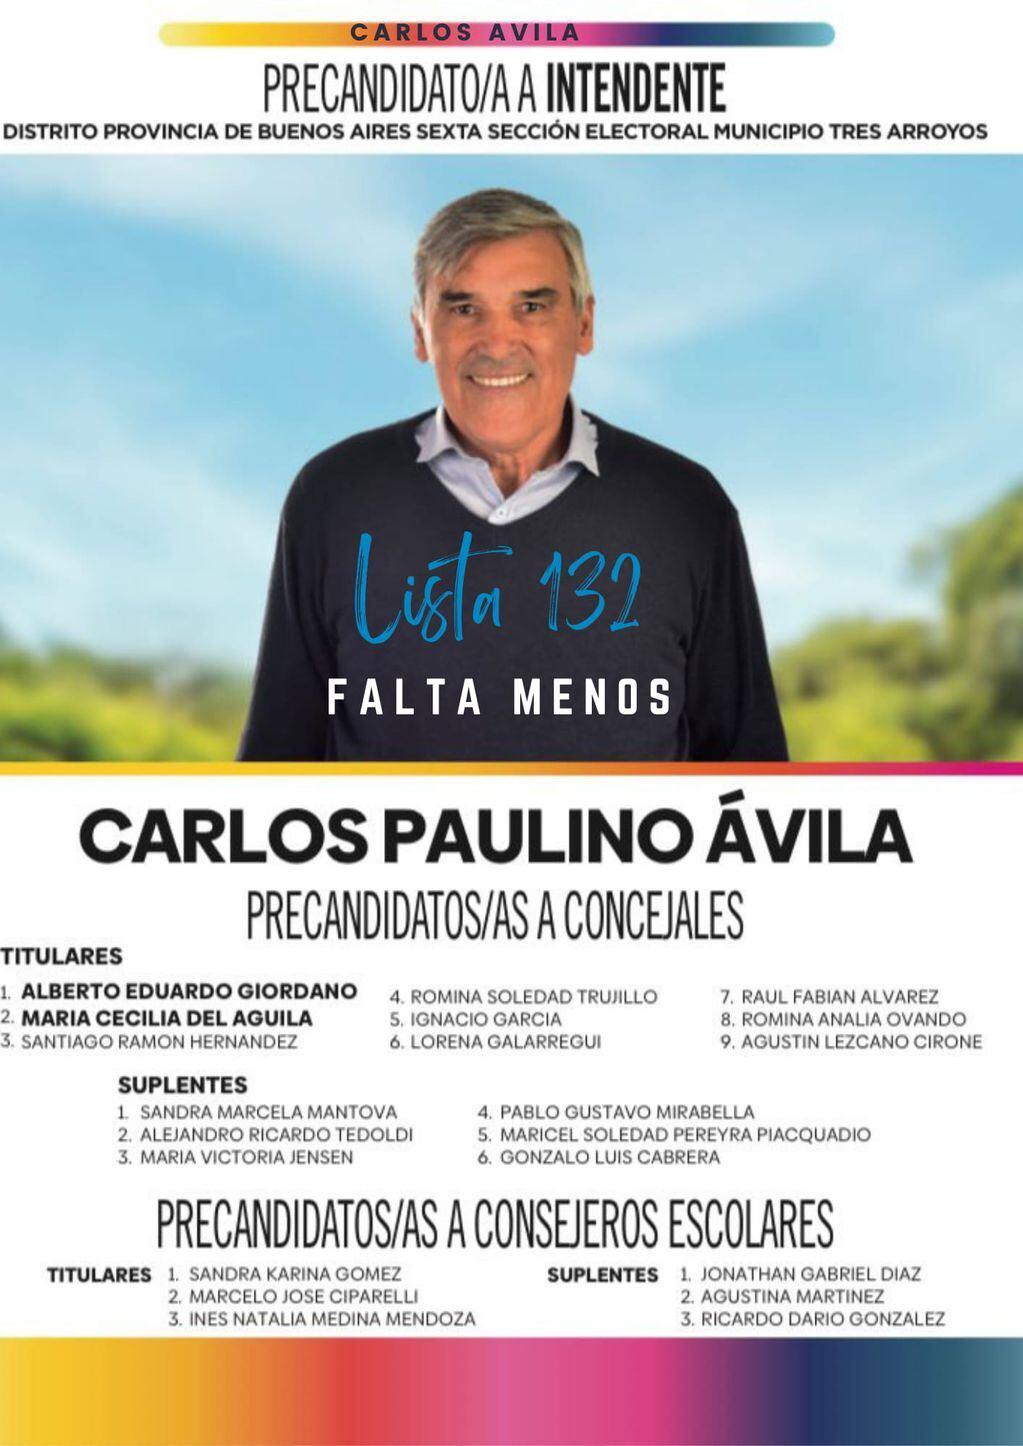 Carlos Avila, precandidato a intendente Evolución Radical Tres Arroyos